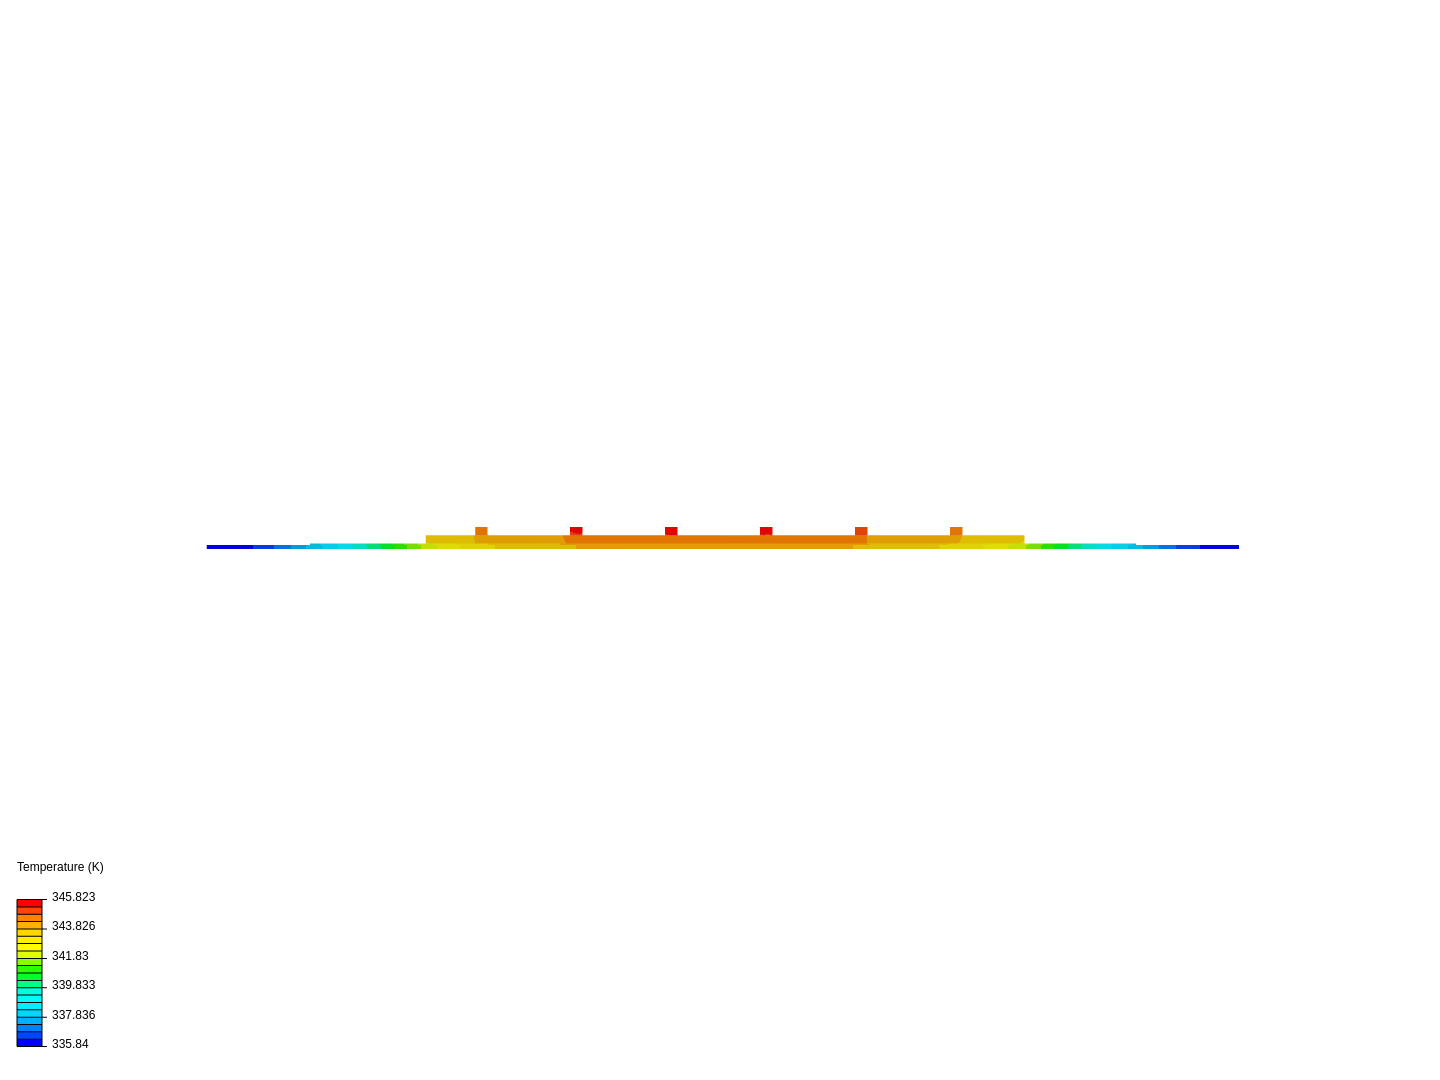 LED rail simulation image